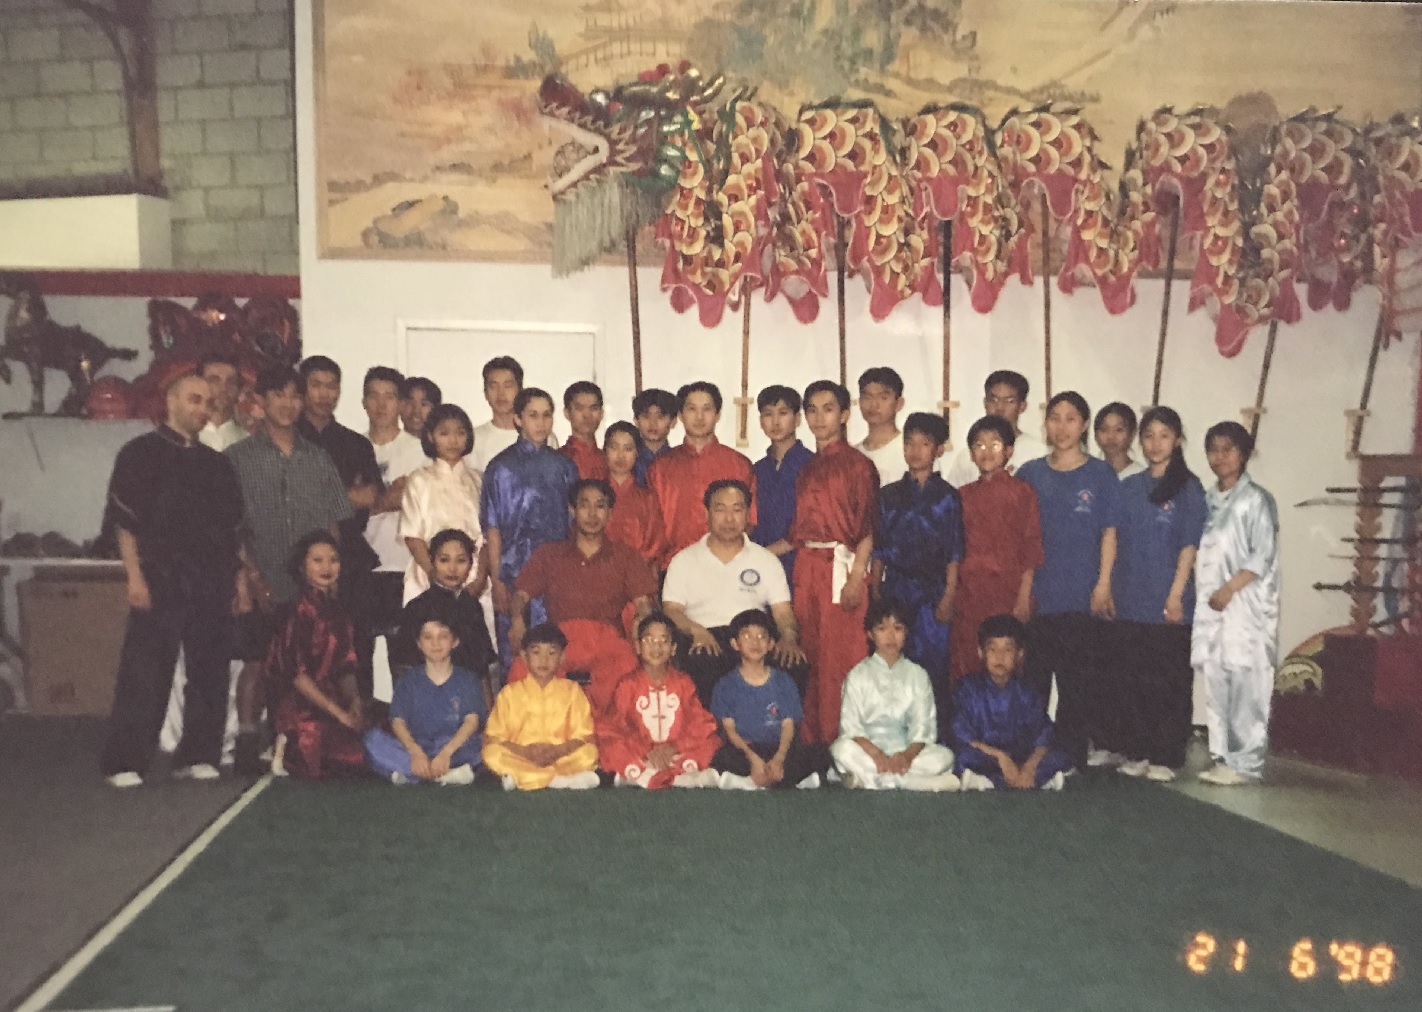 Group shot of the wushu team, 1998